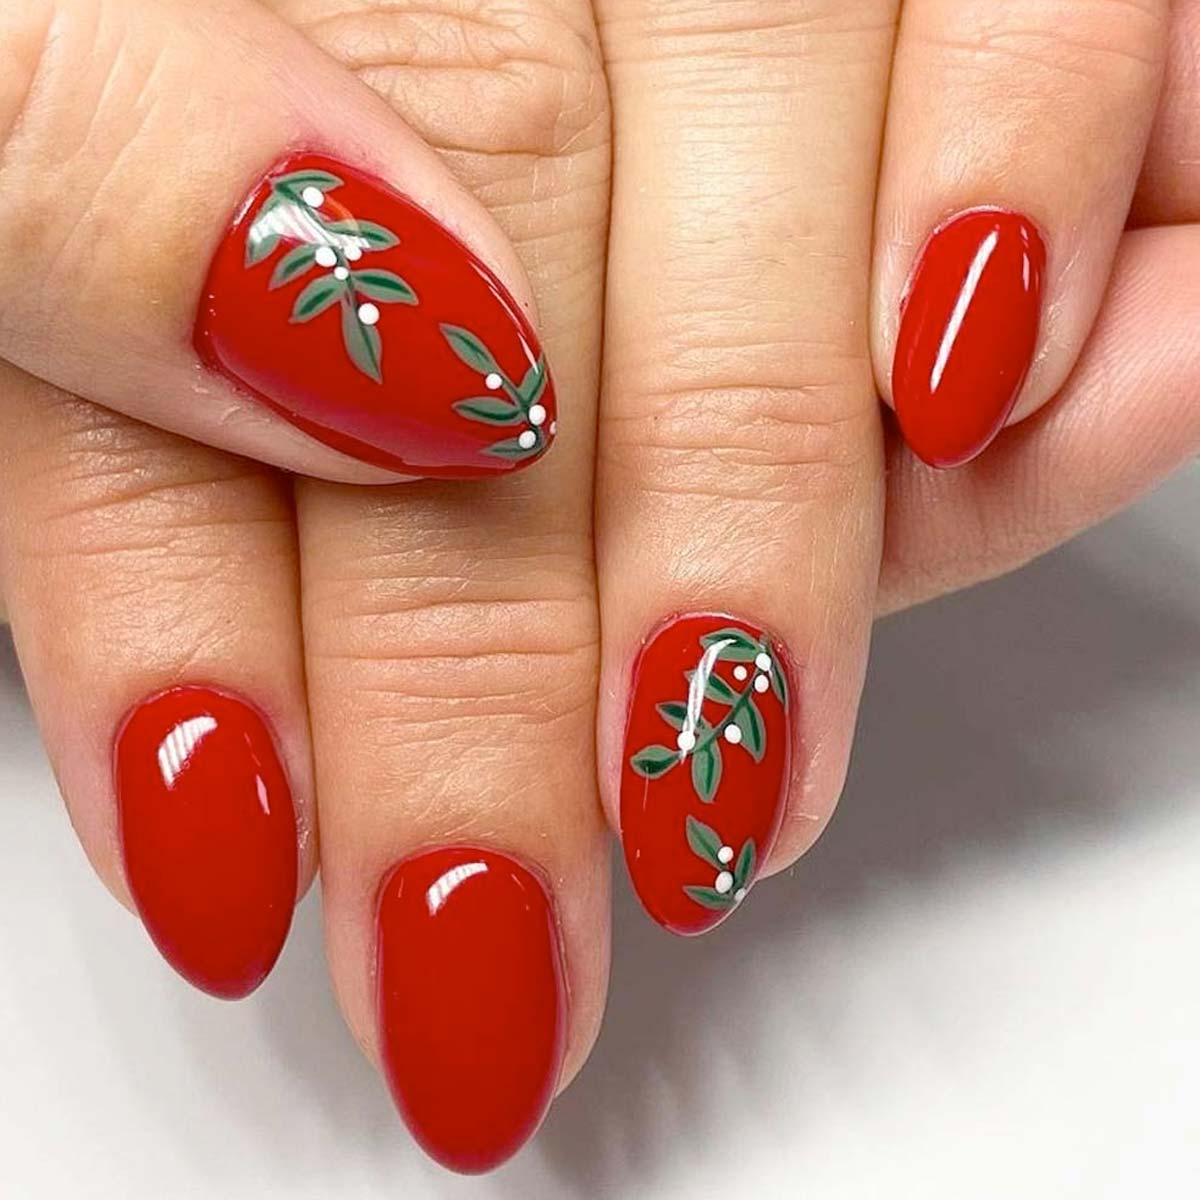 Nail art natalizia unghie rosse